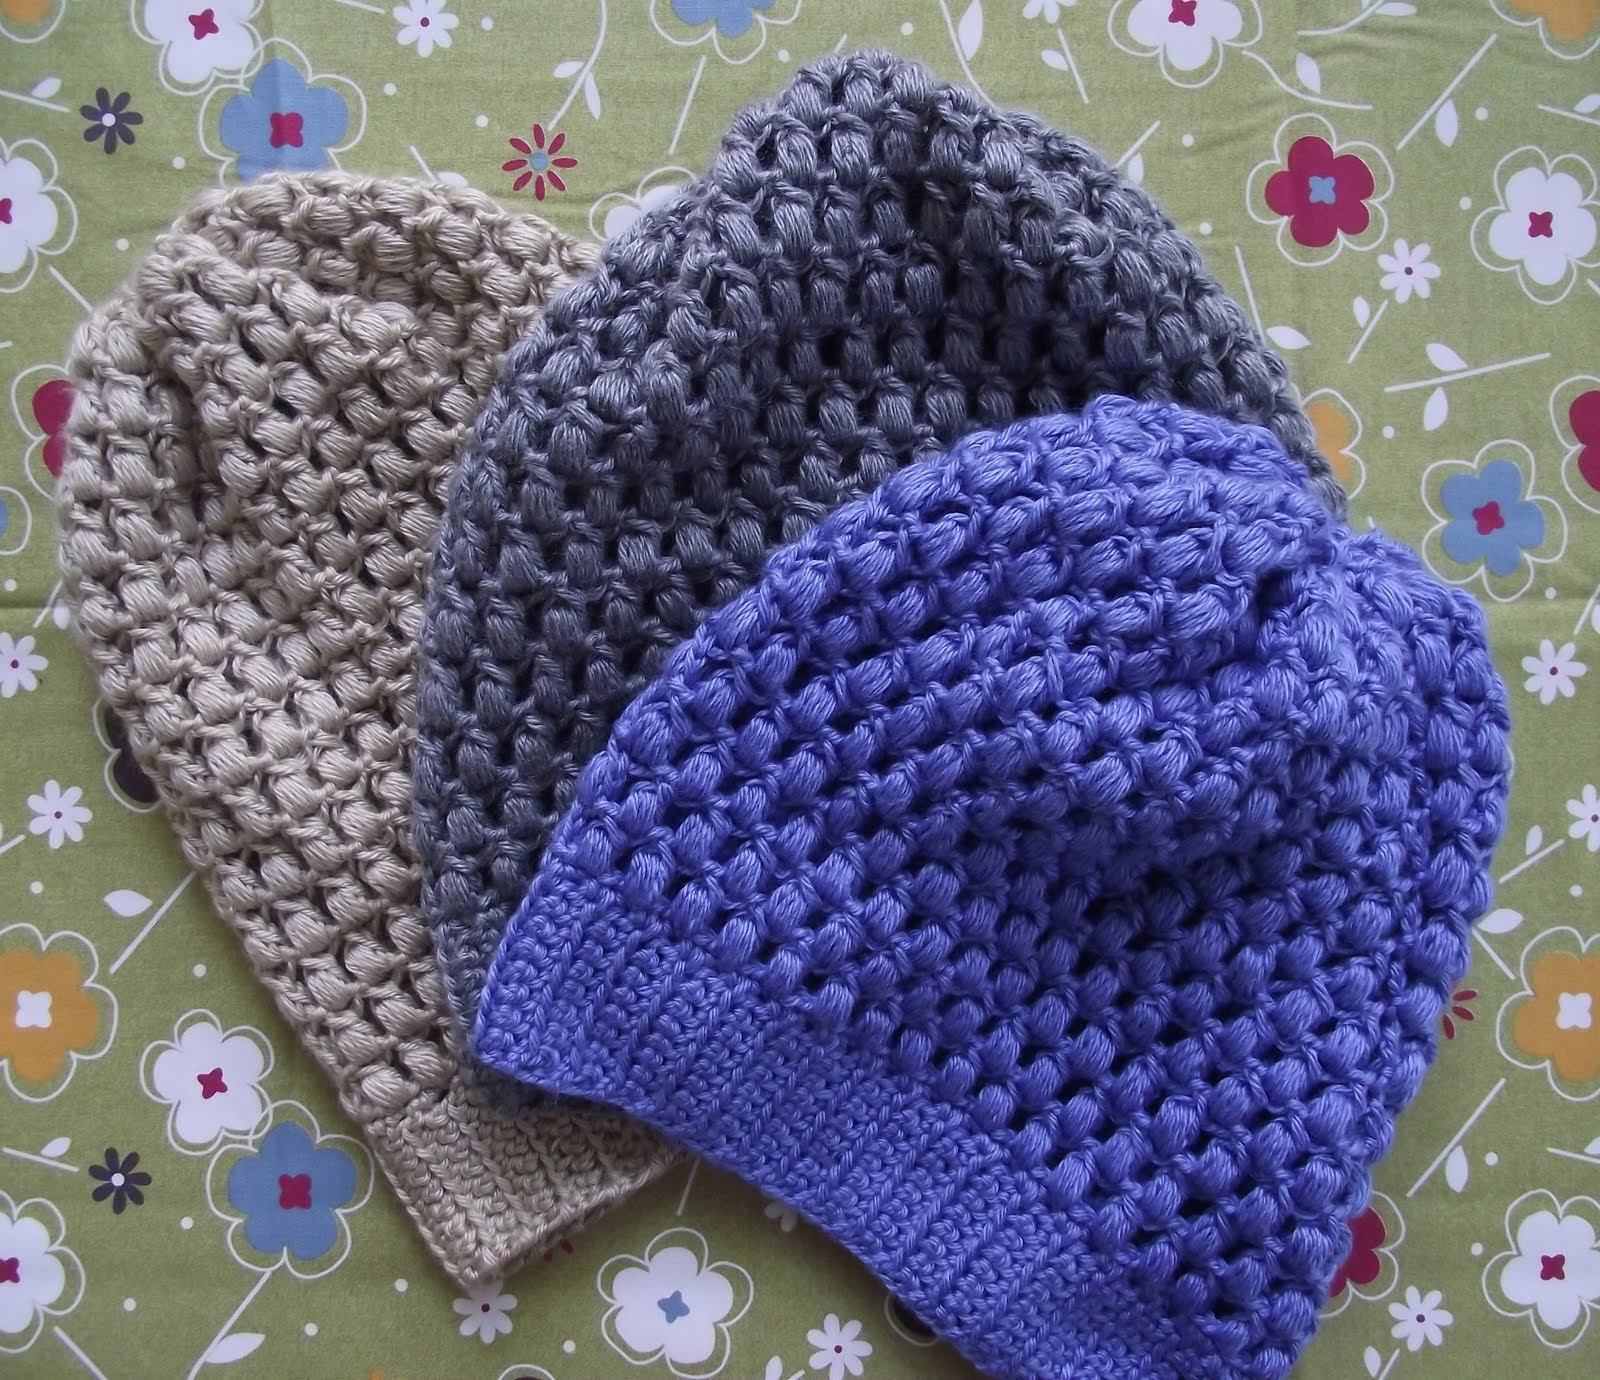 Caron Simply Soft Crochet Patterns Knit1fortheroads Blog